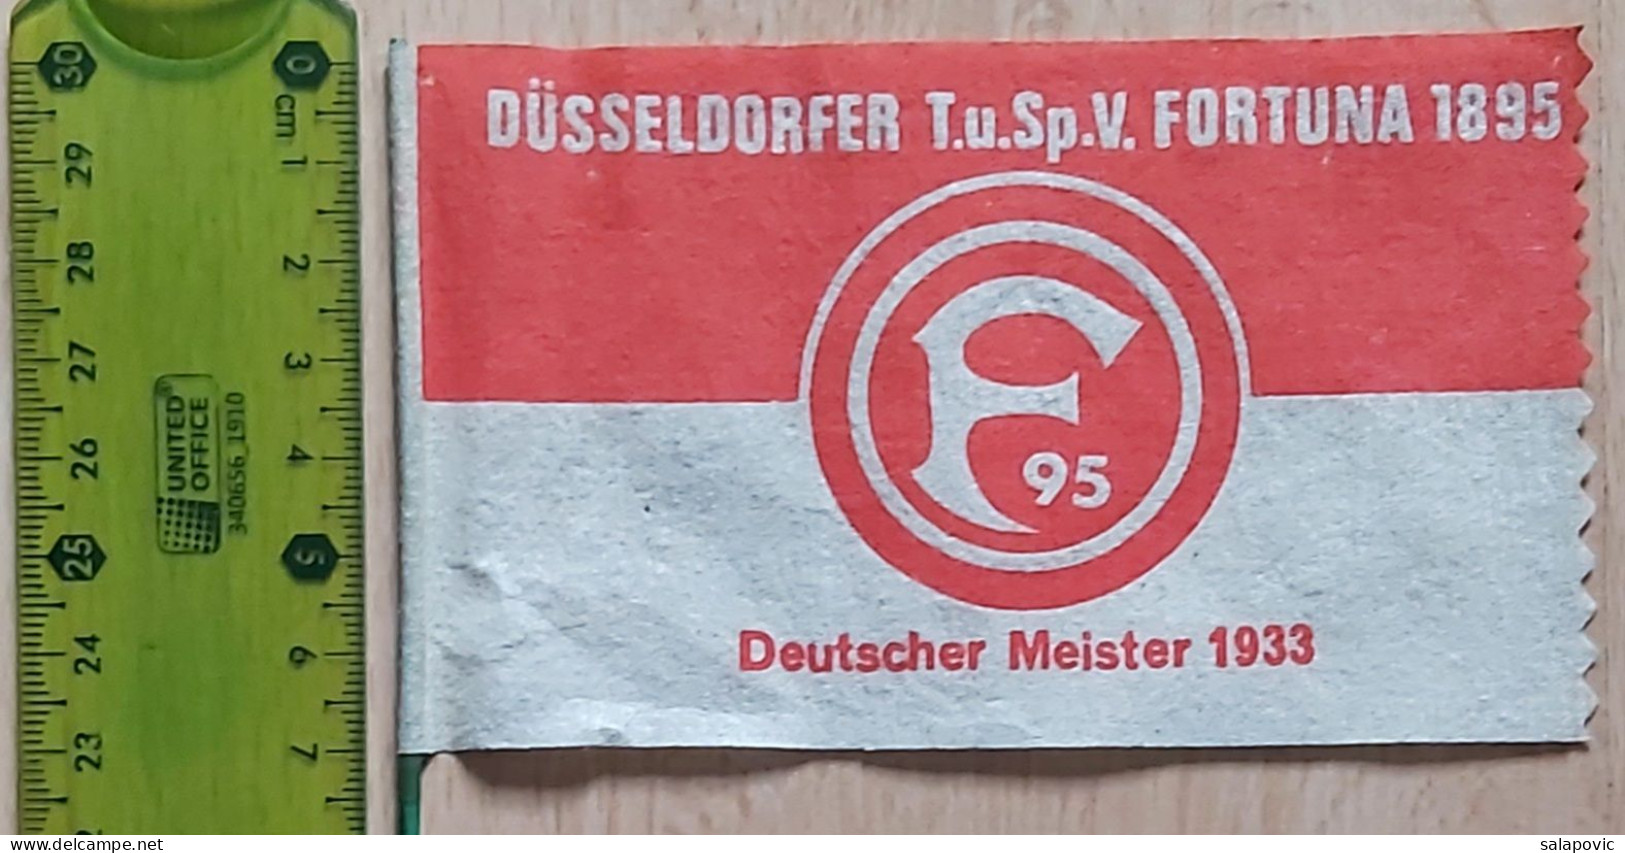 Düsseldorfer TuS Fortuna 1895  Germany, Deutscher Meister 1933 Football Club Fussball Soccer Calcio PENNANT ZS 1 KUT - Apparel, Souvenirs & Other